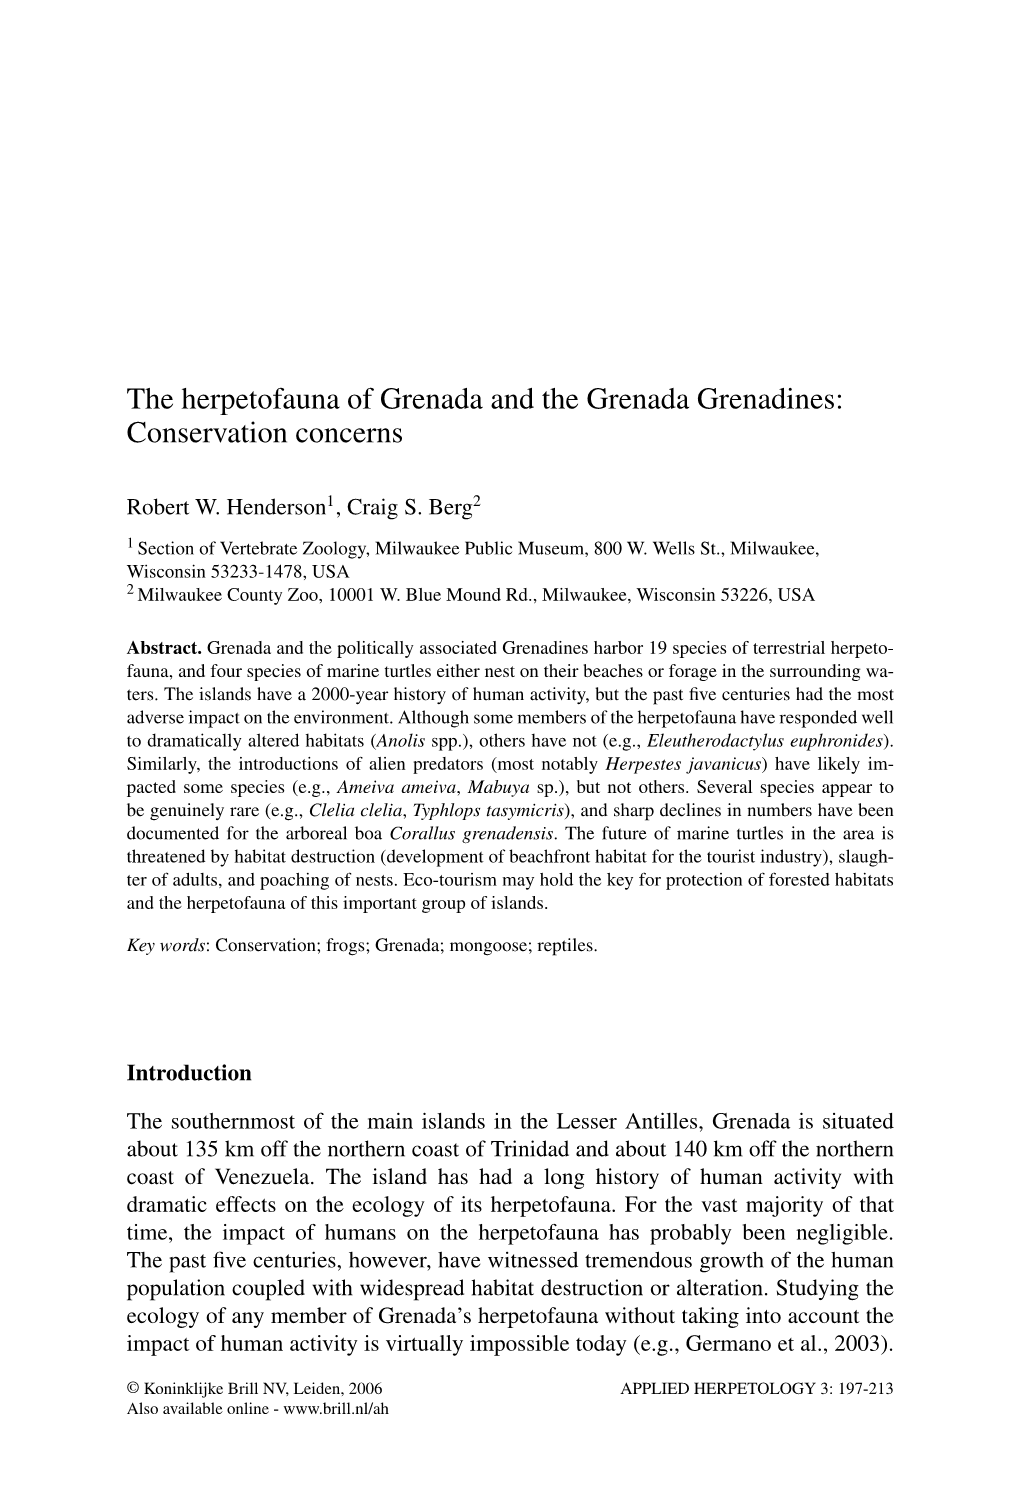 The Herpetofauna of Grenada and the Grenada Grenadines: Conservation Concerns